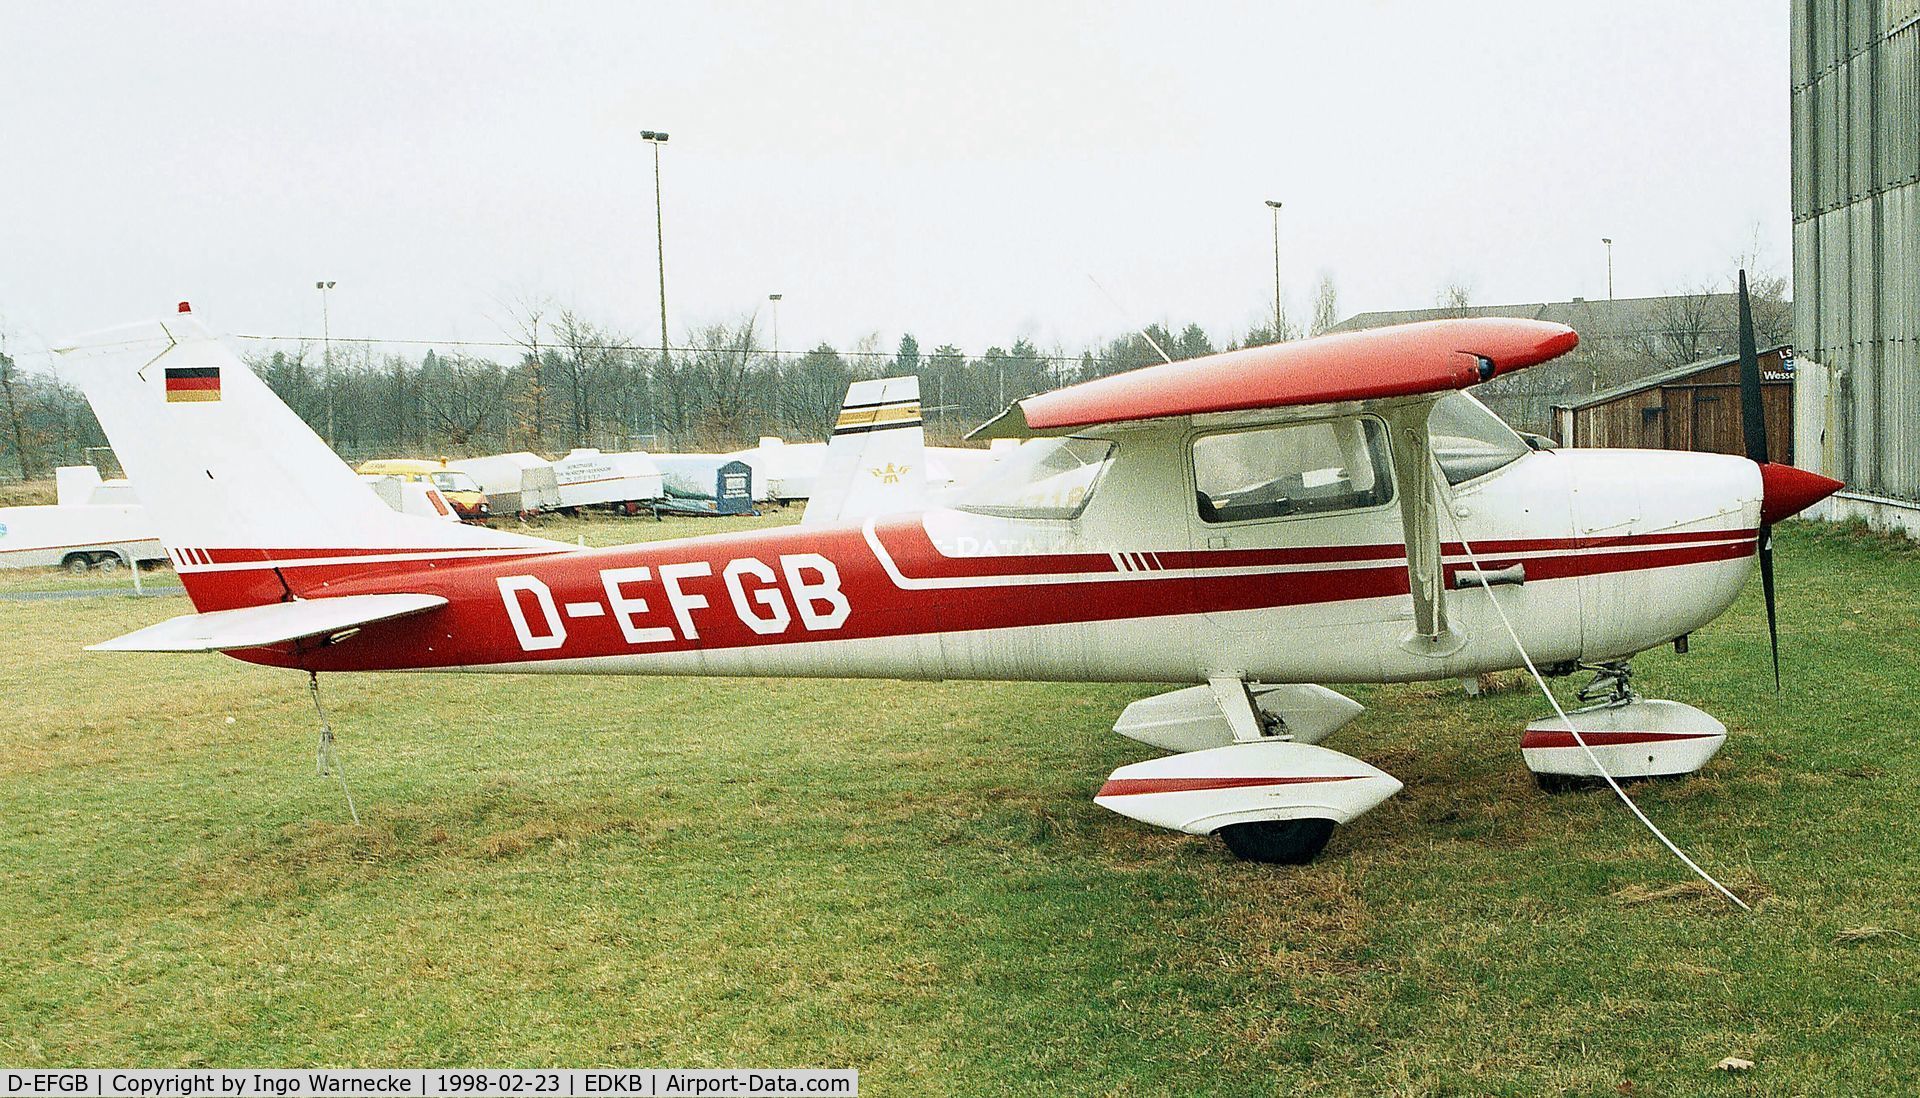 D-EFGB, Reims F150H C/N F15000248, Cessna (Reims) F150H at Bonn-Hangelar airfield